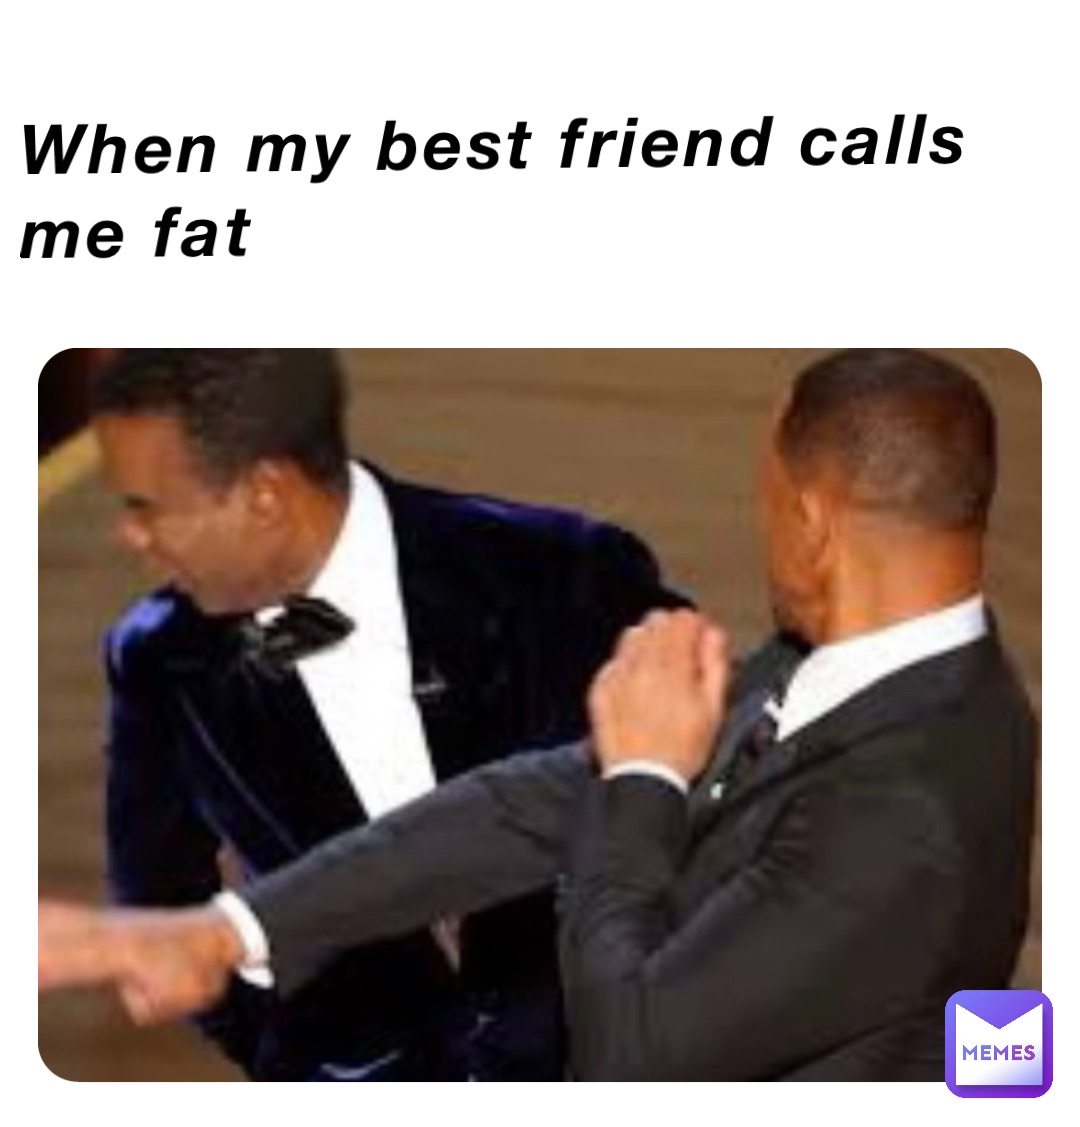 When my best friend calls me fat